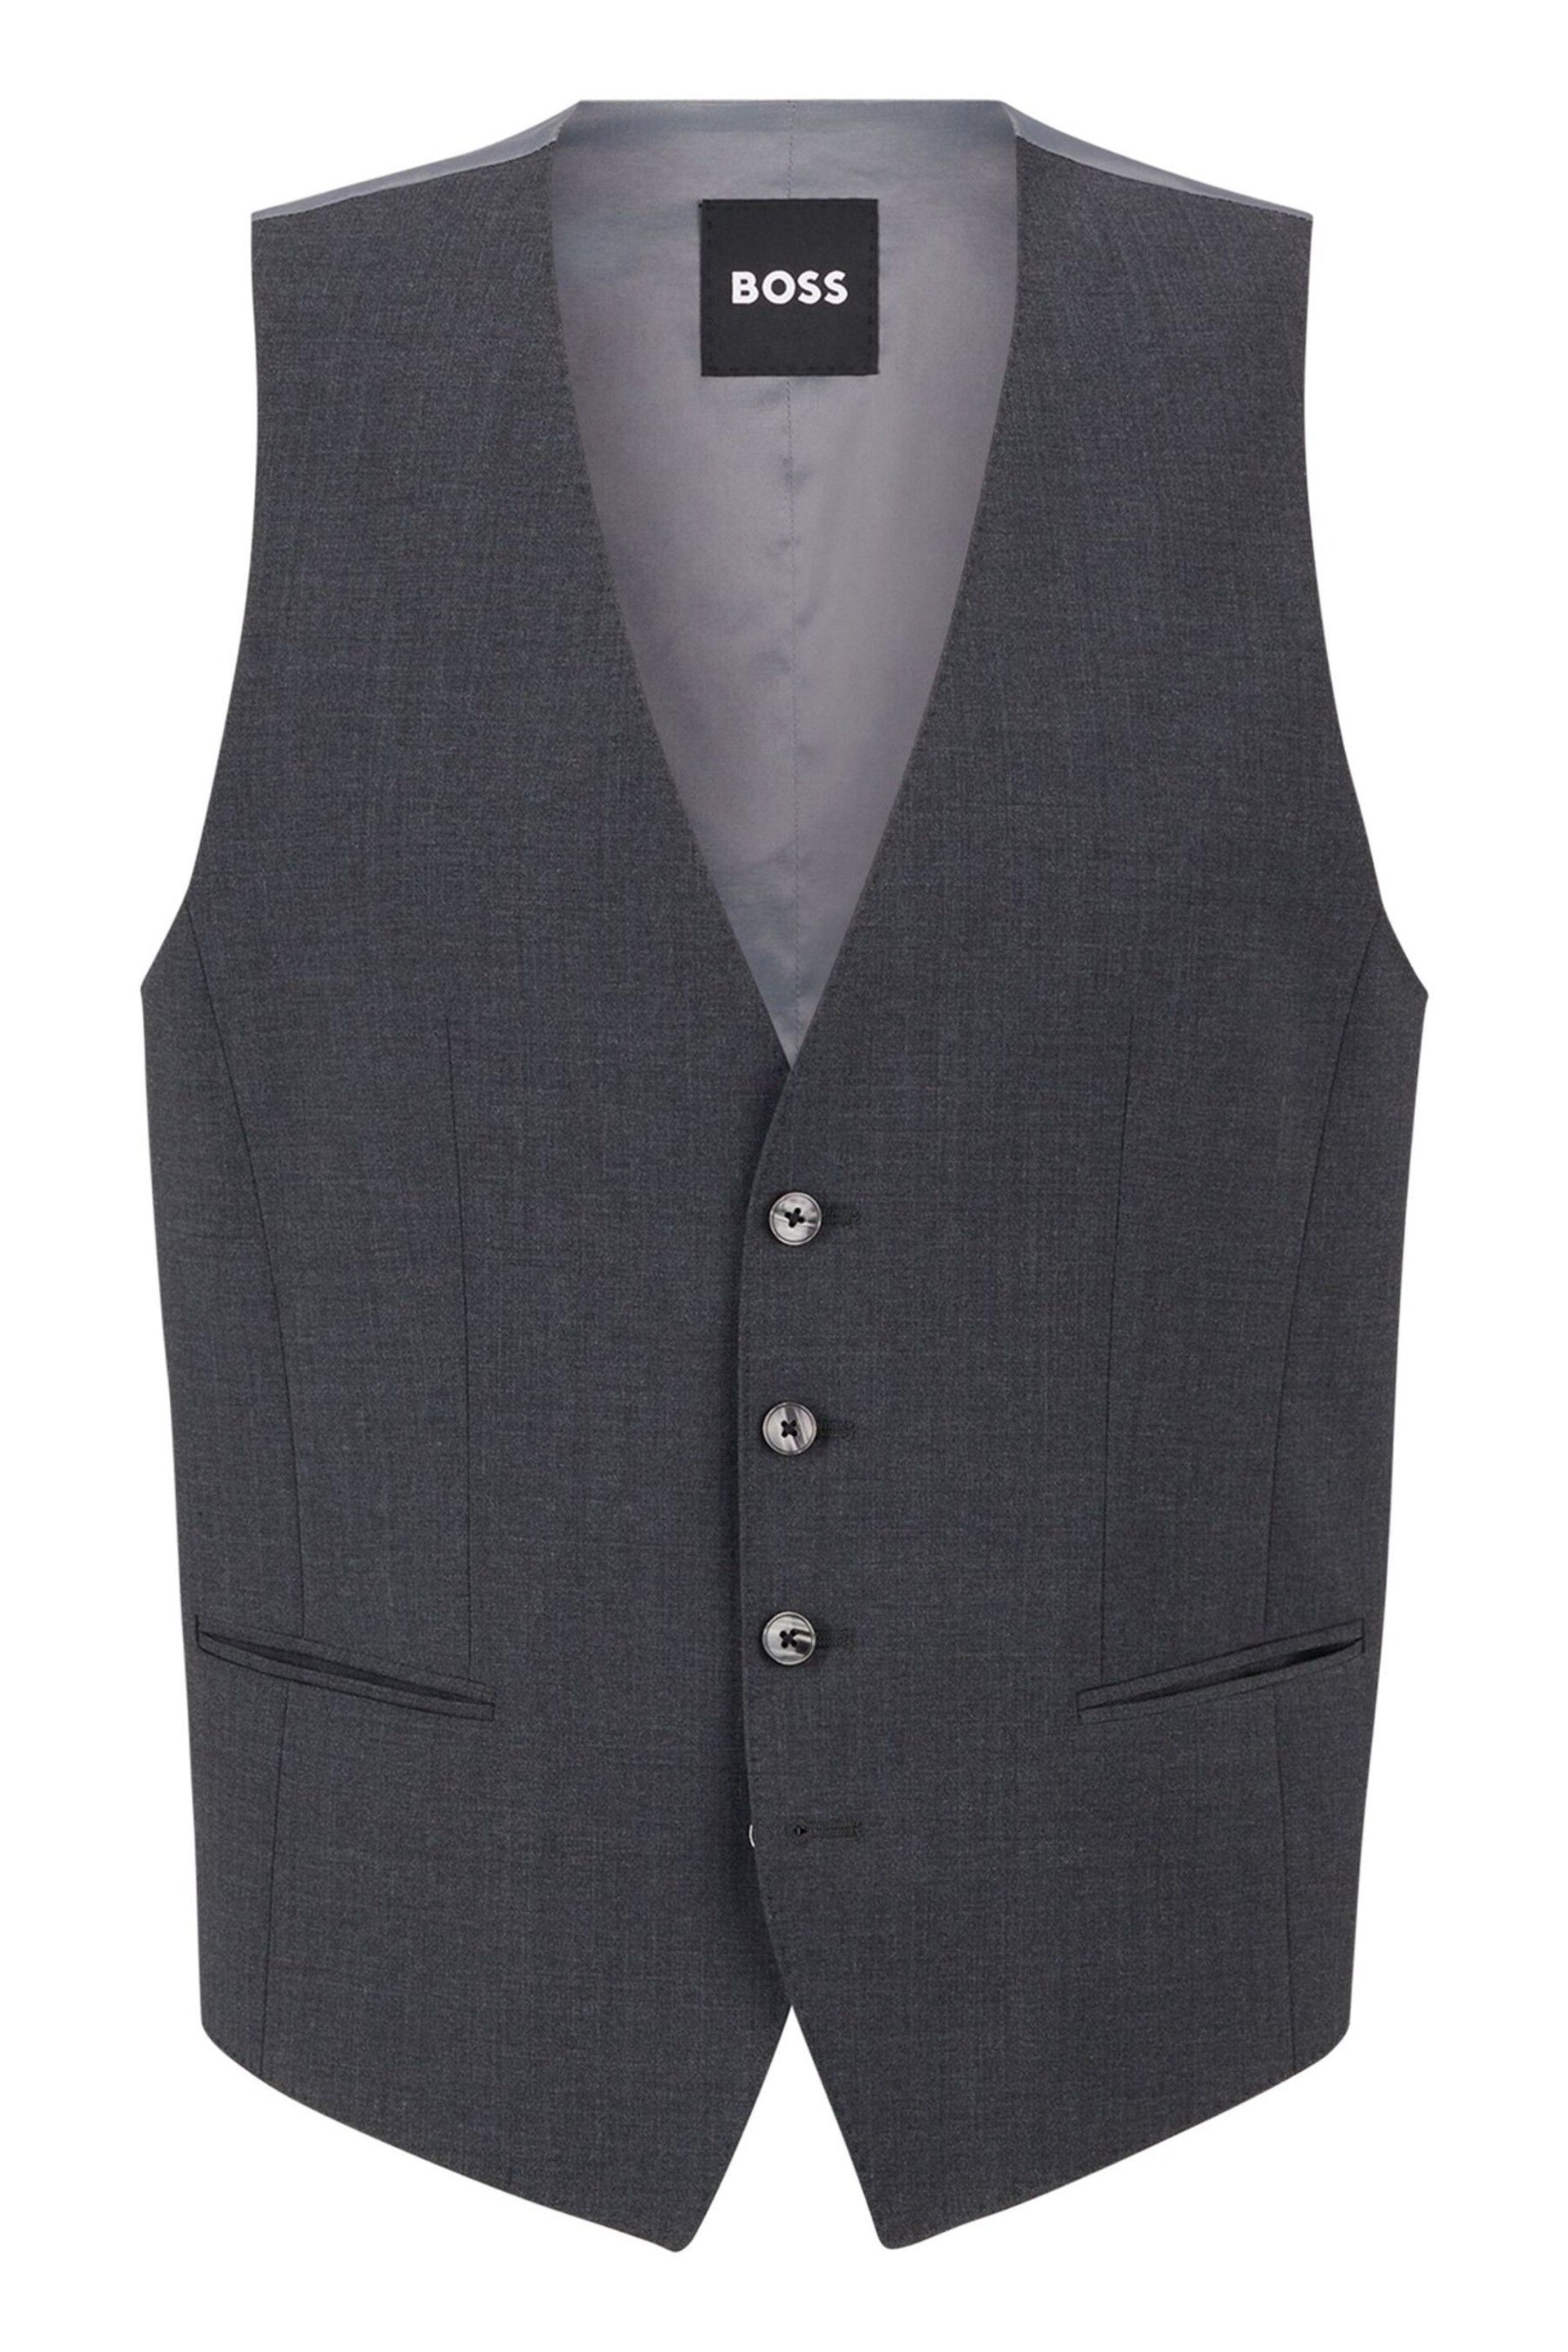 BOSS Grey Slim Fit Wool Blend Waistcoat - Image 5 of 5